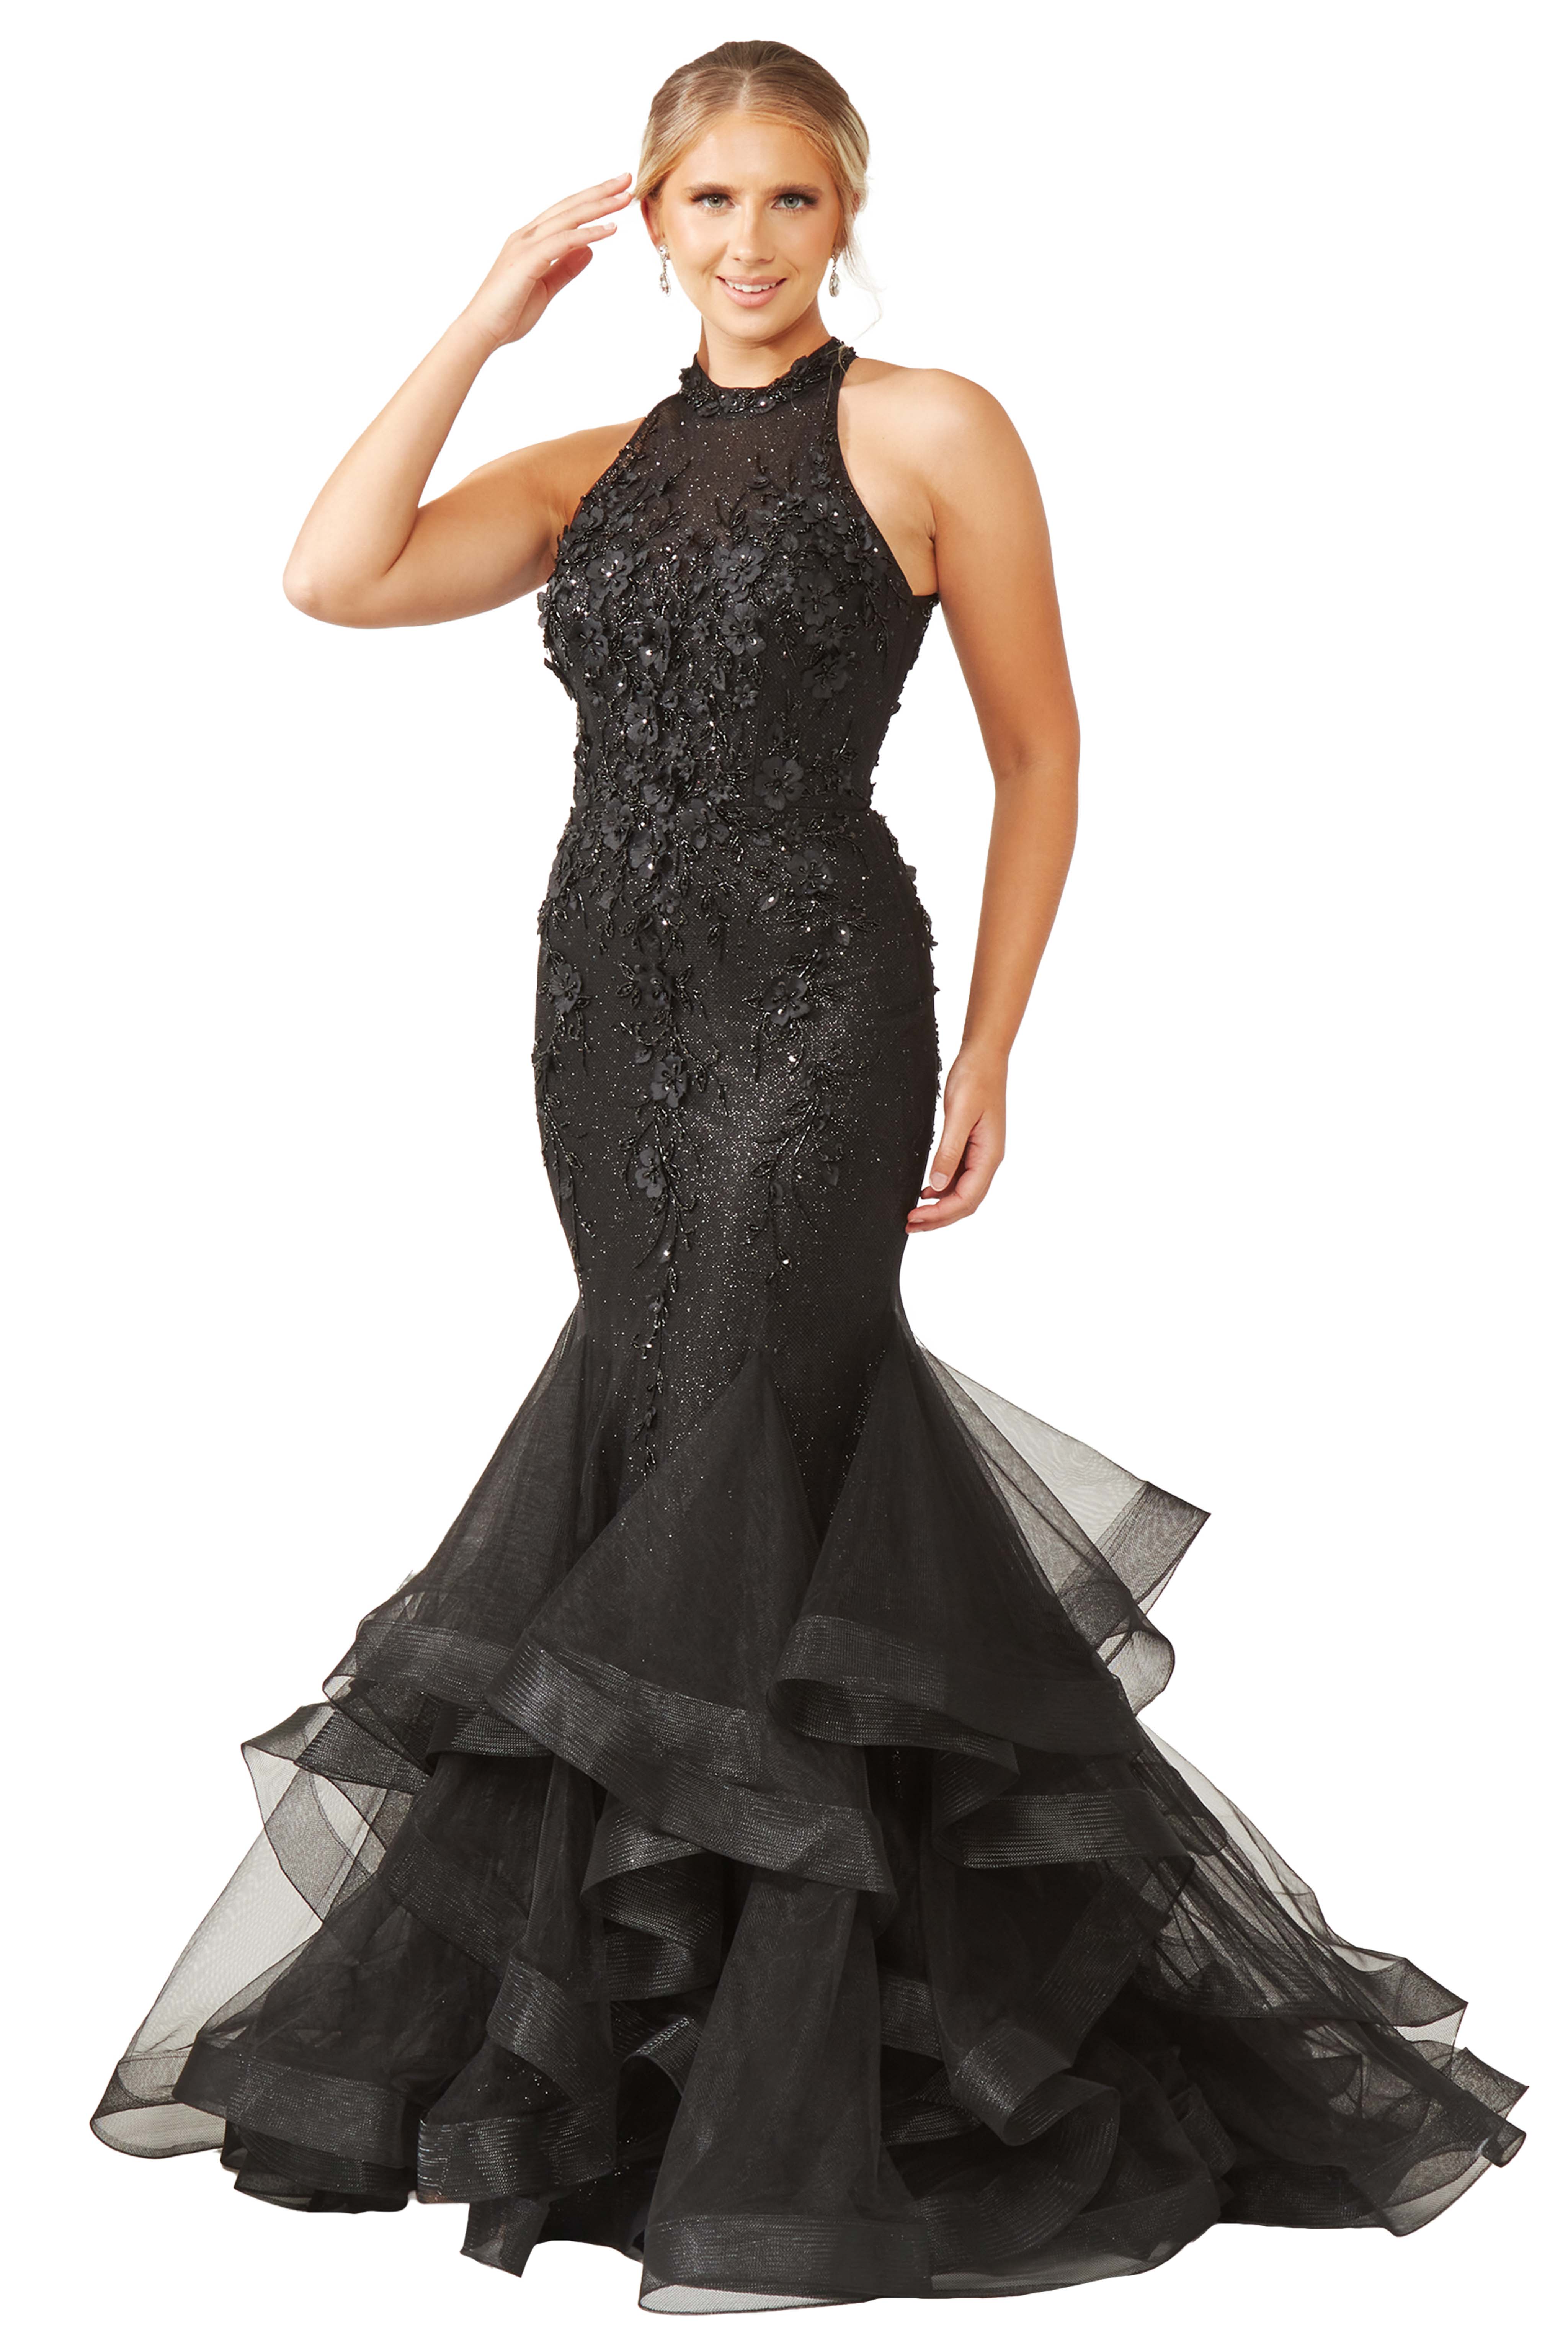 Designer Satin Black Halterneck Dress, Luxury Eveningwear Dress